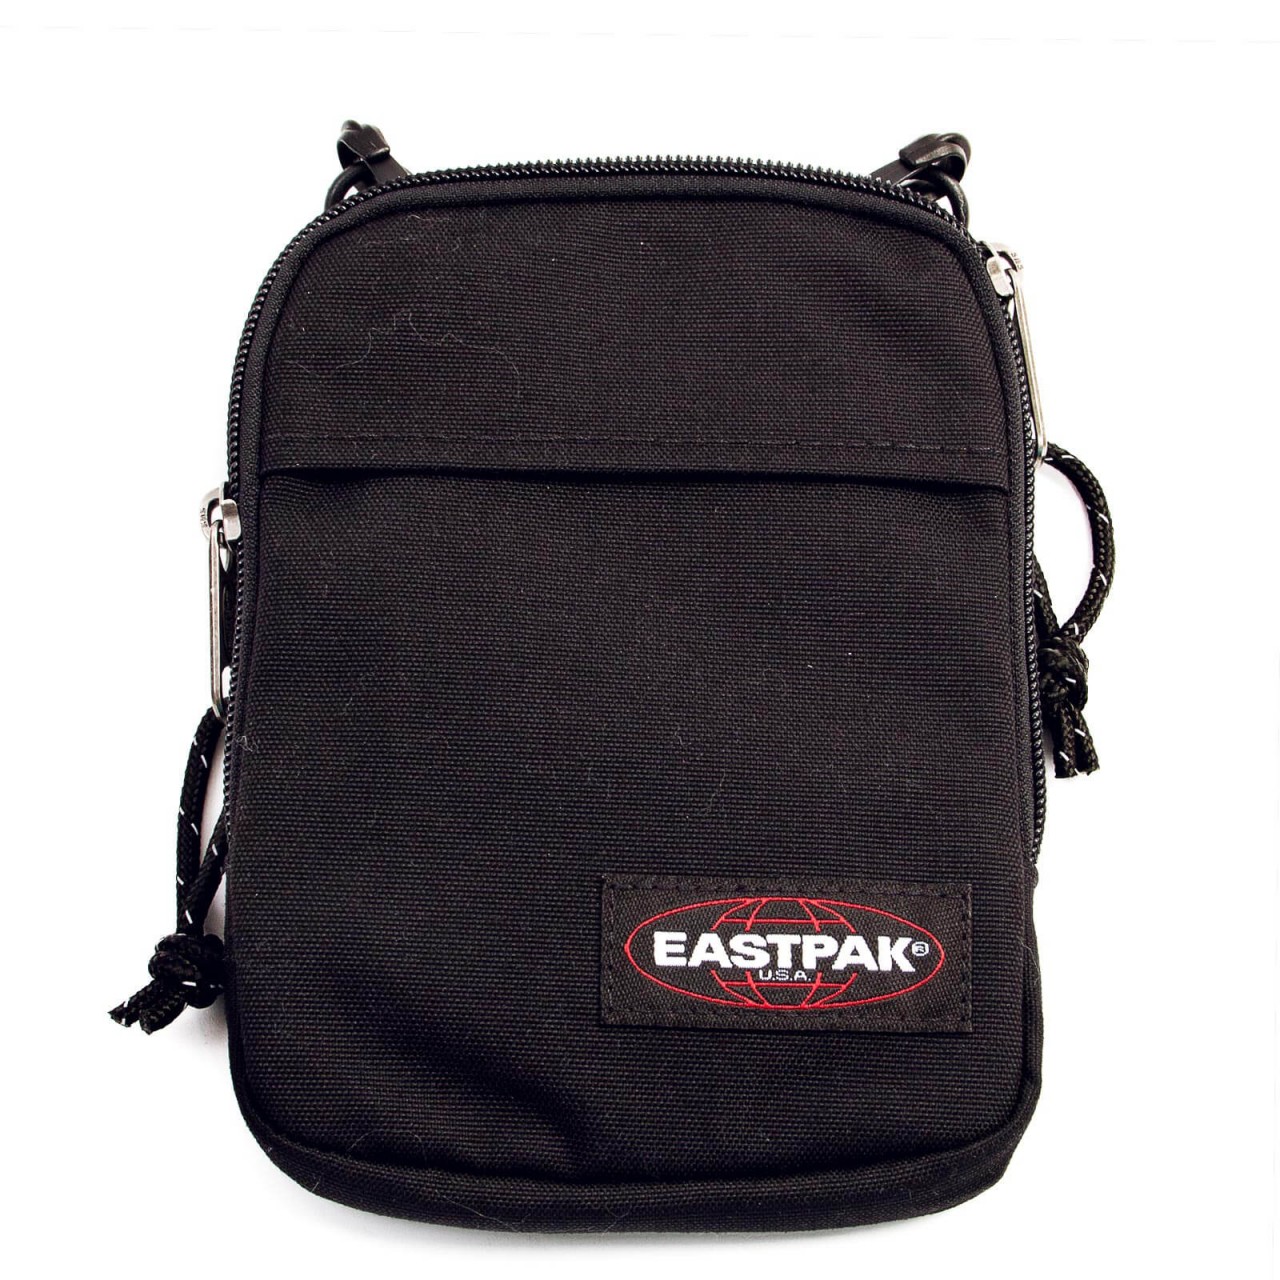 Eastpak Bag Mini Buddy Black